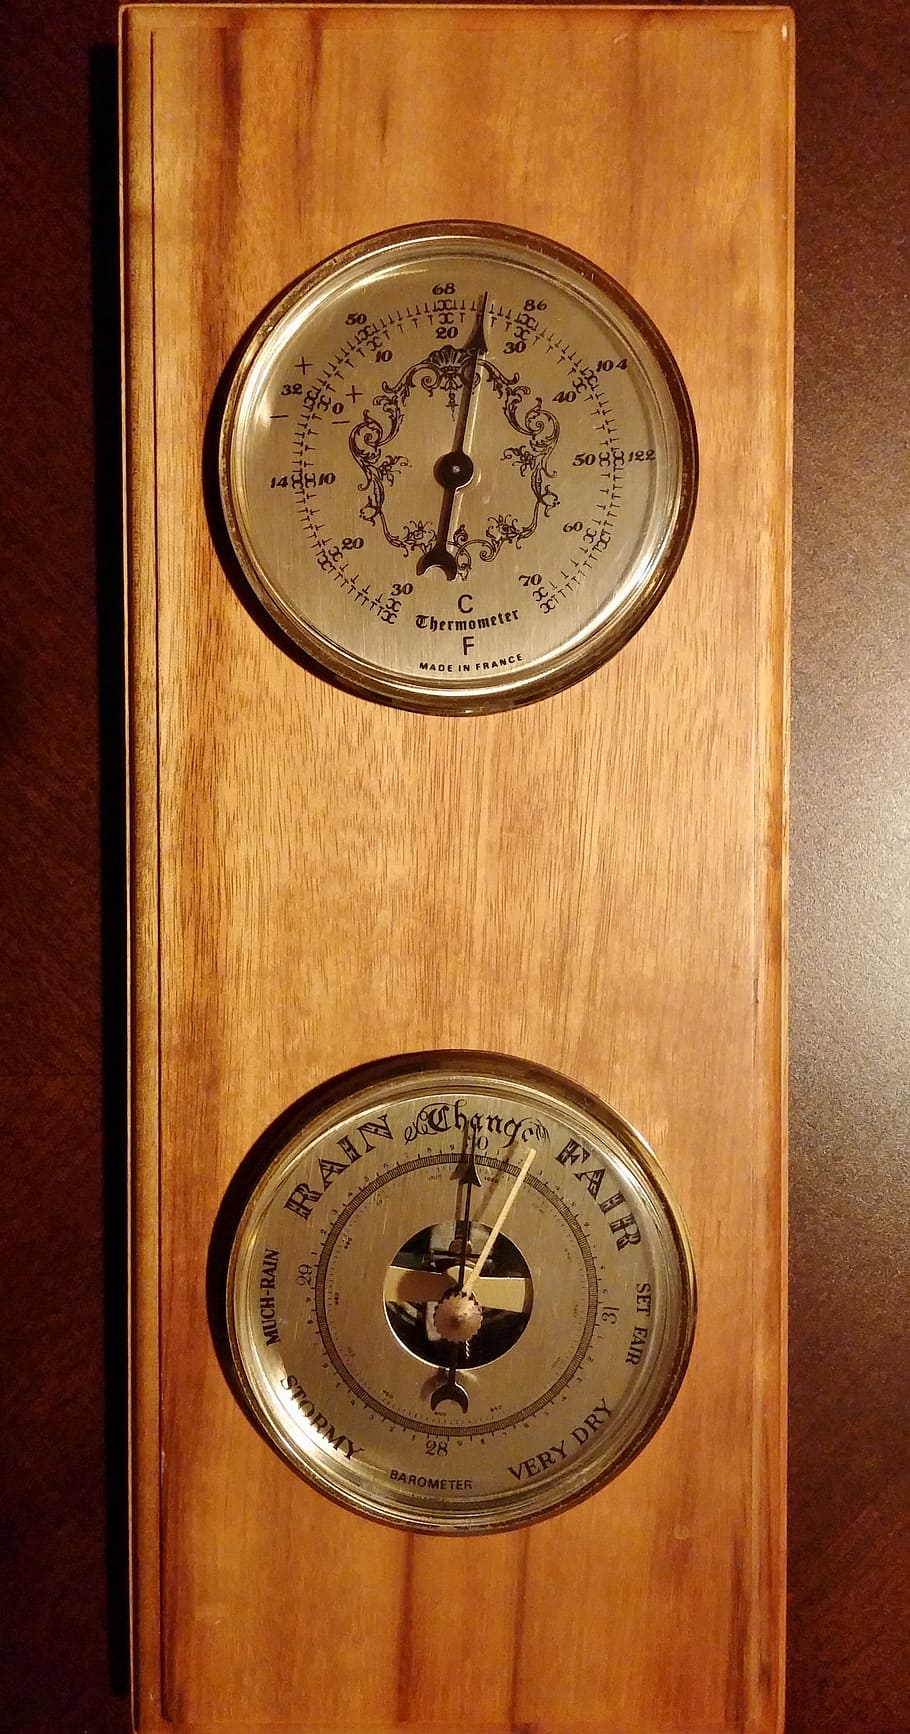 barometer, meteorology, thermometer, pressure, instruments, weather, change, temperature, number, indoors